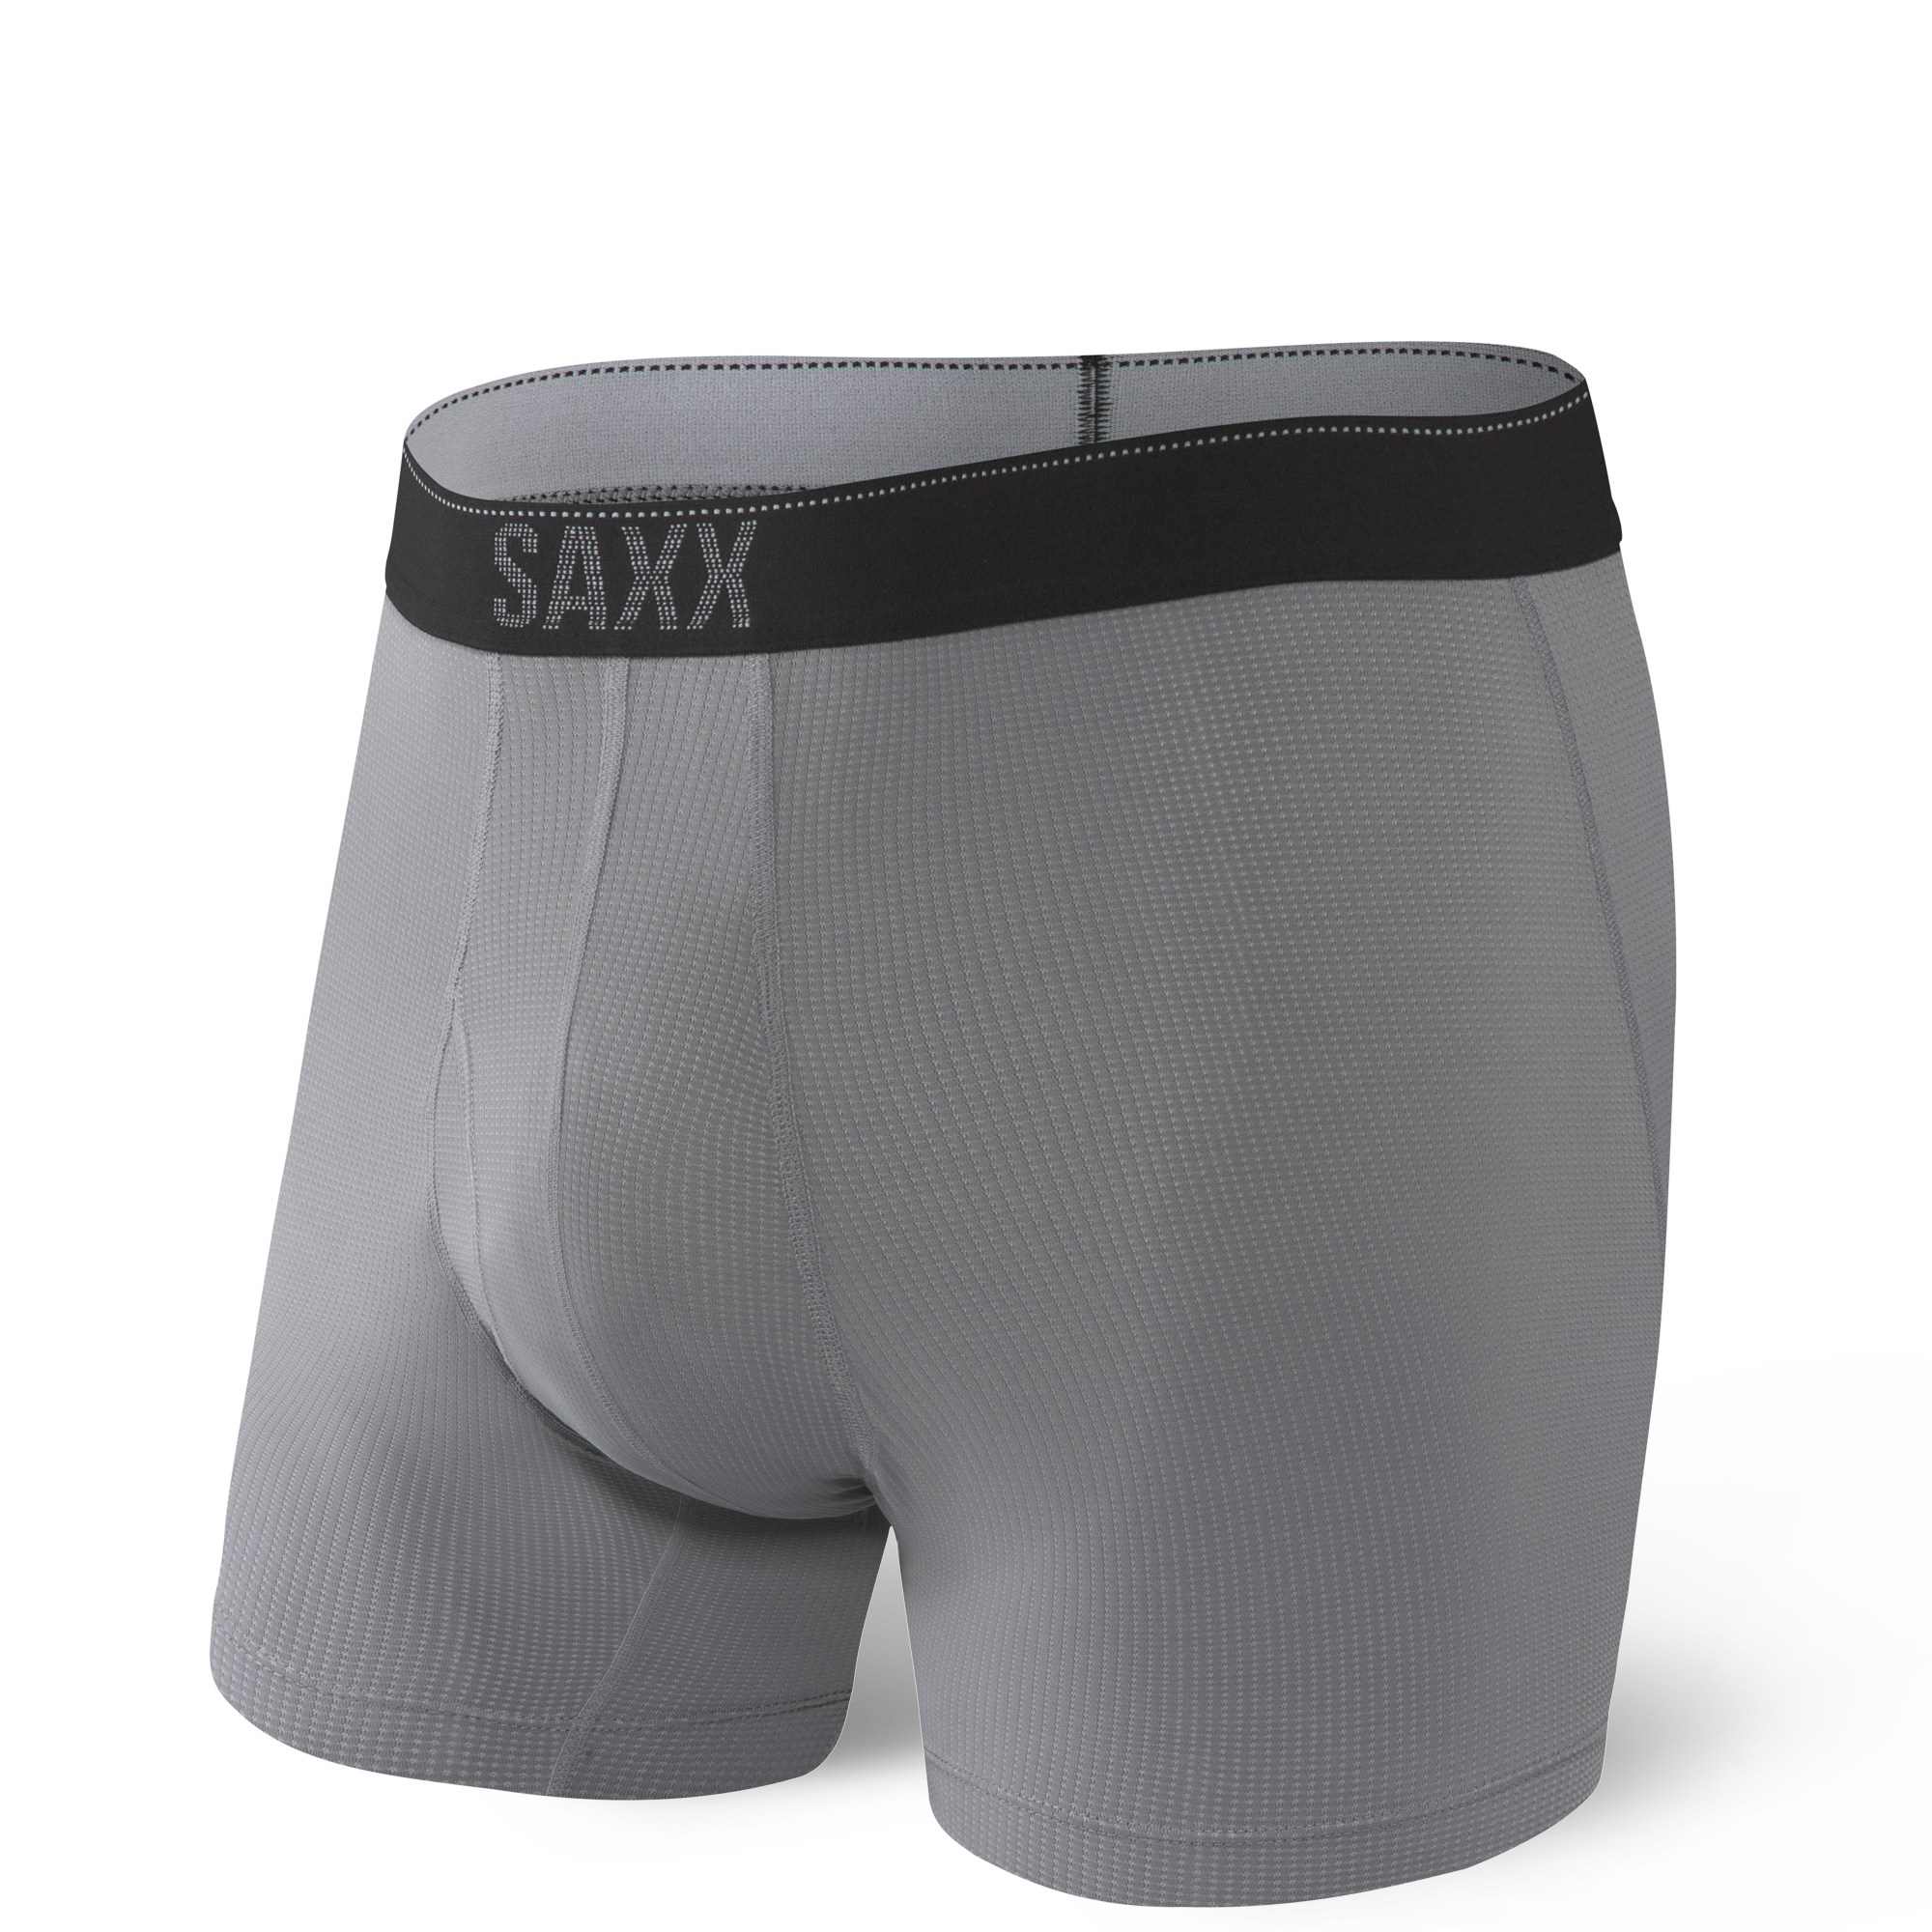 Quest Boxer Brief in Dark Charcoal II by SAXX Underwear Co